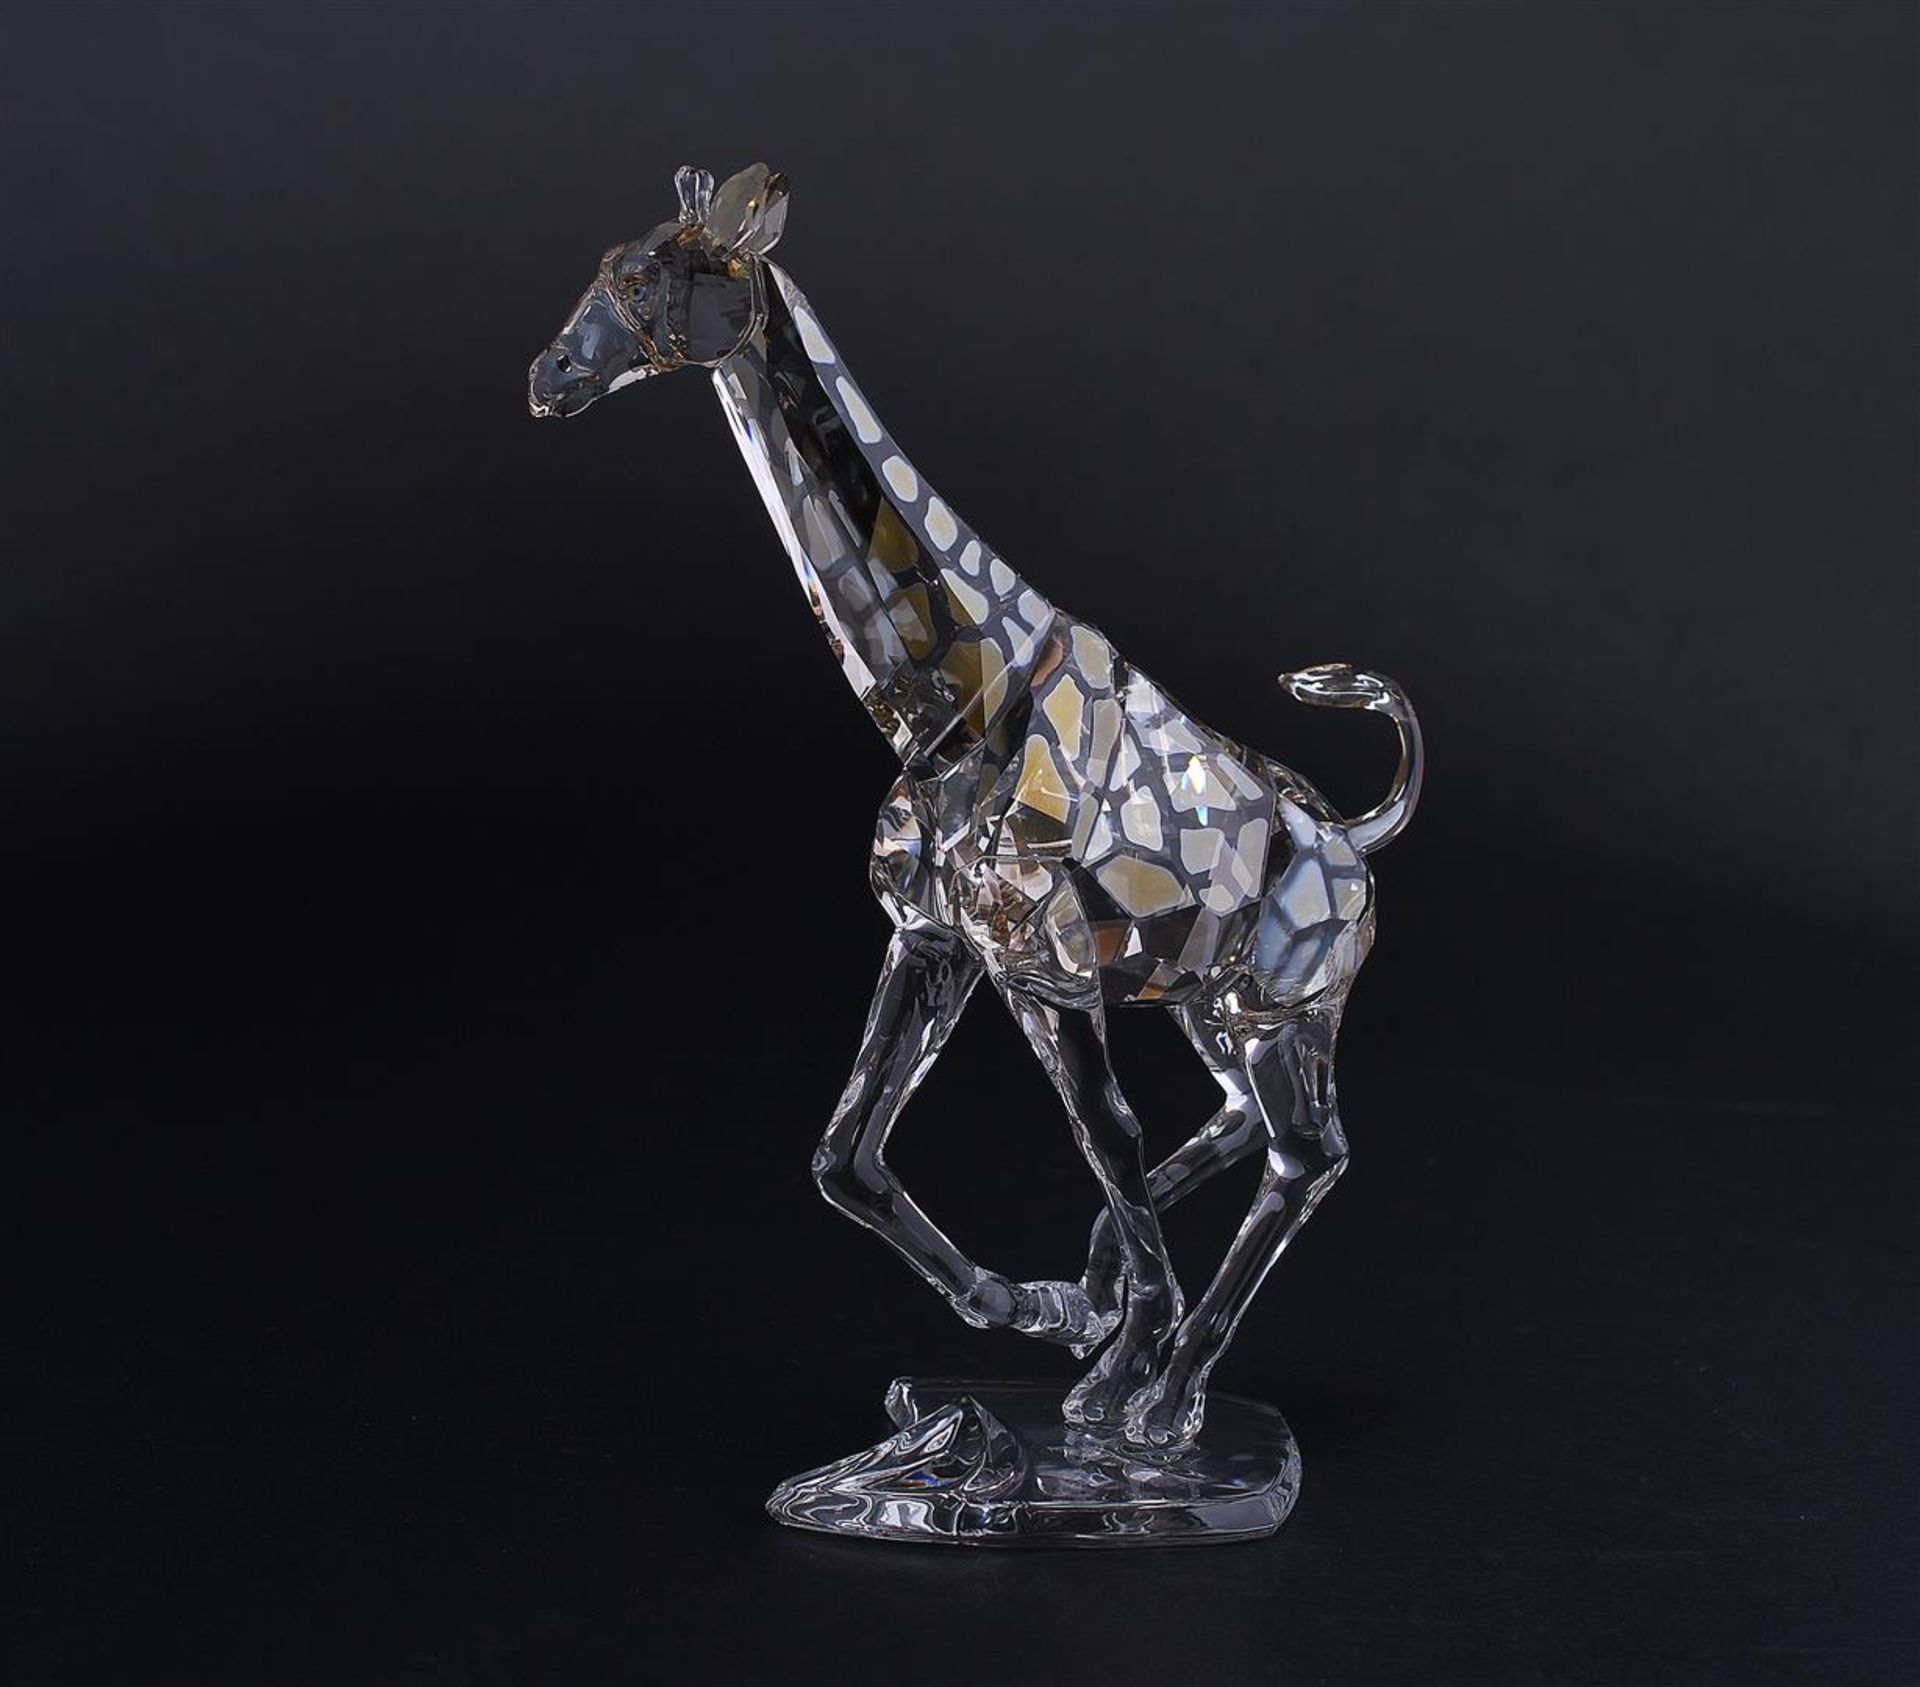 Swarovski, Giraffe, Year of Release 2012, 935896. Includes original box.
17 x 12 cm. - Image 2 of 8